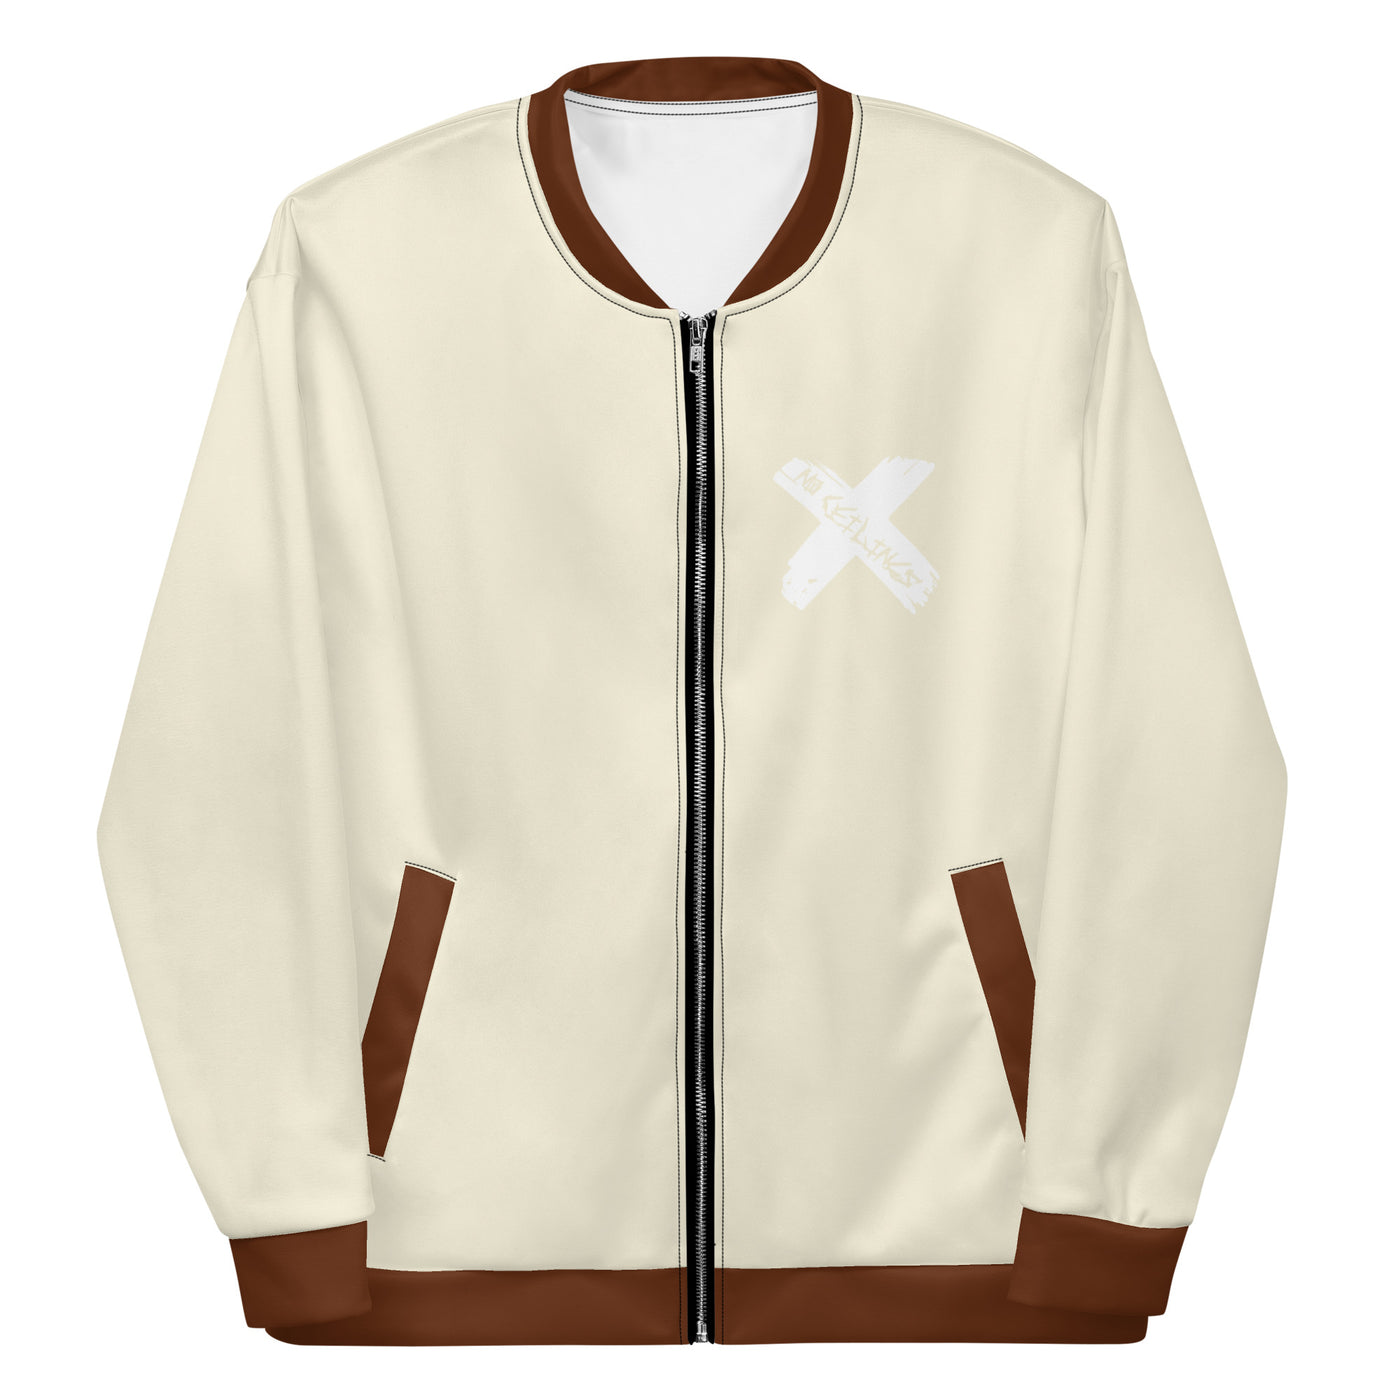 Crème/Brown Unisex Bomber Jacket